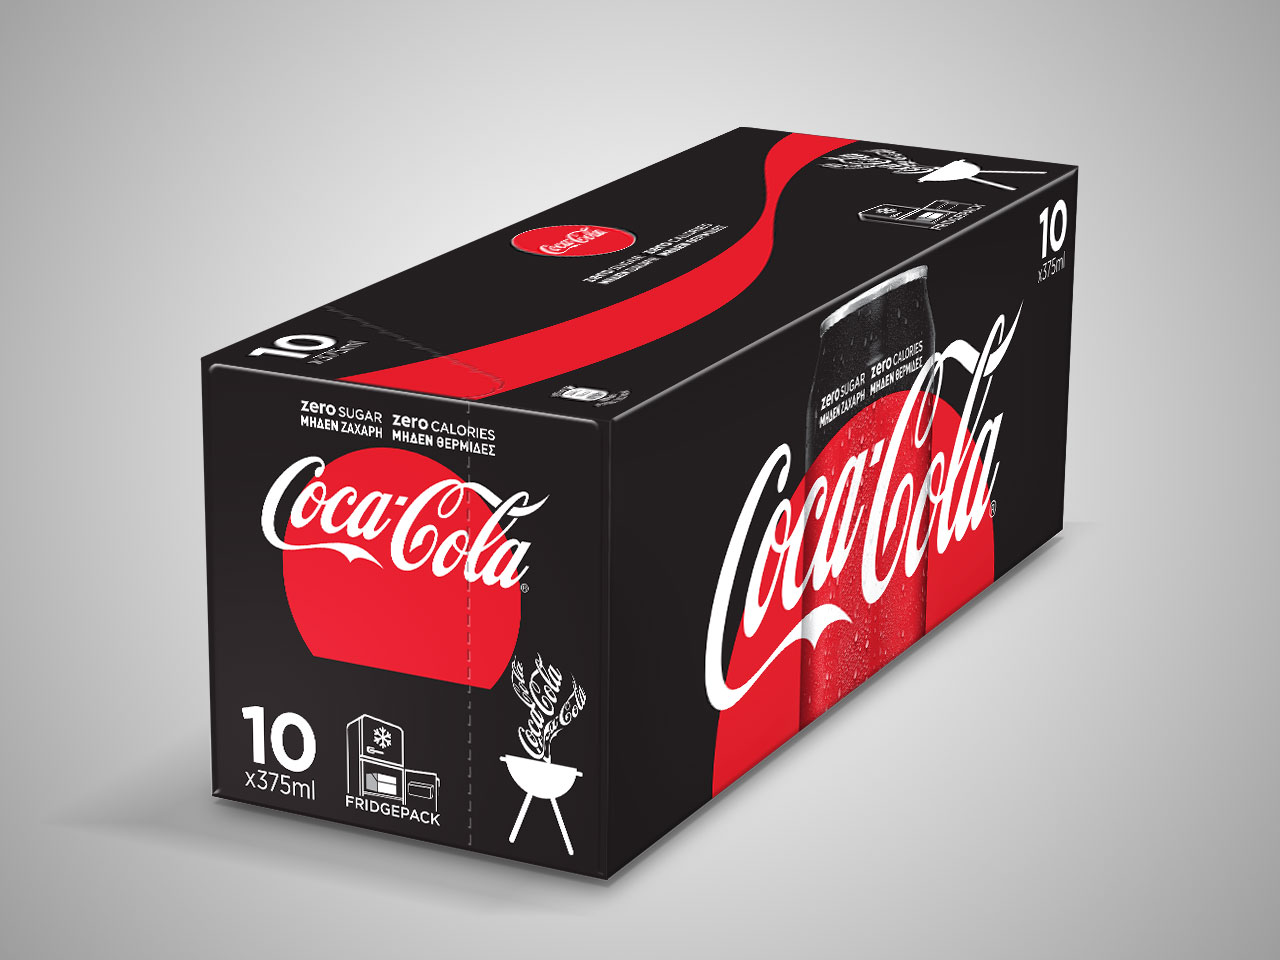 Packshot of the Coca-Cola Zero fridgepack.